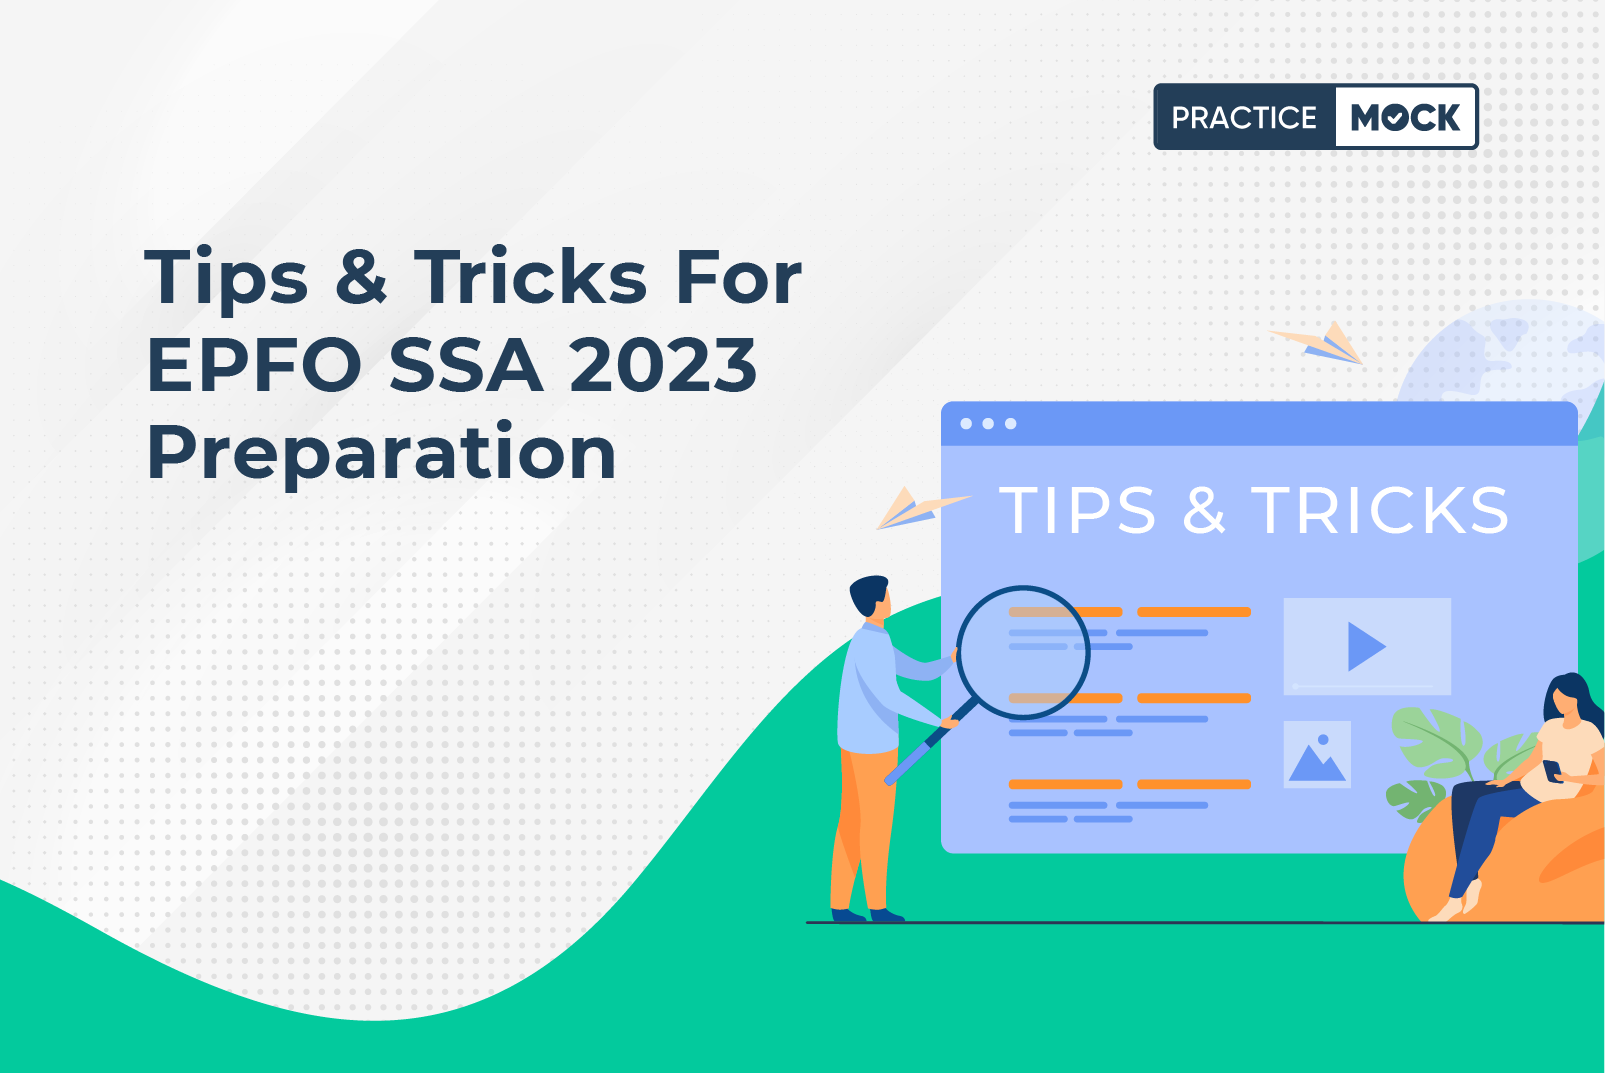 Tips & Tricks for EPFO SSA 2023